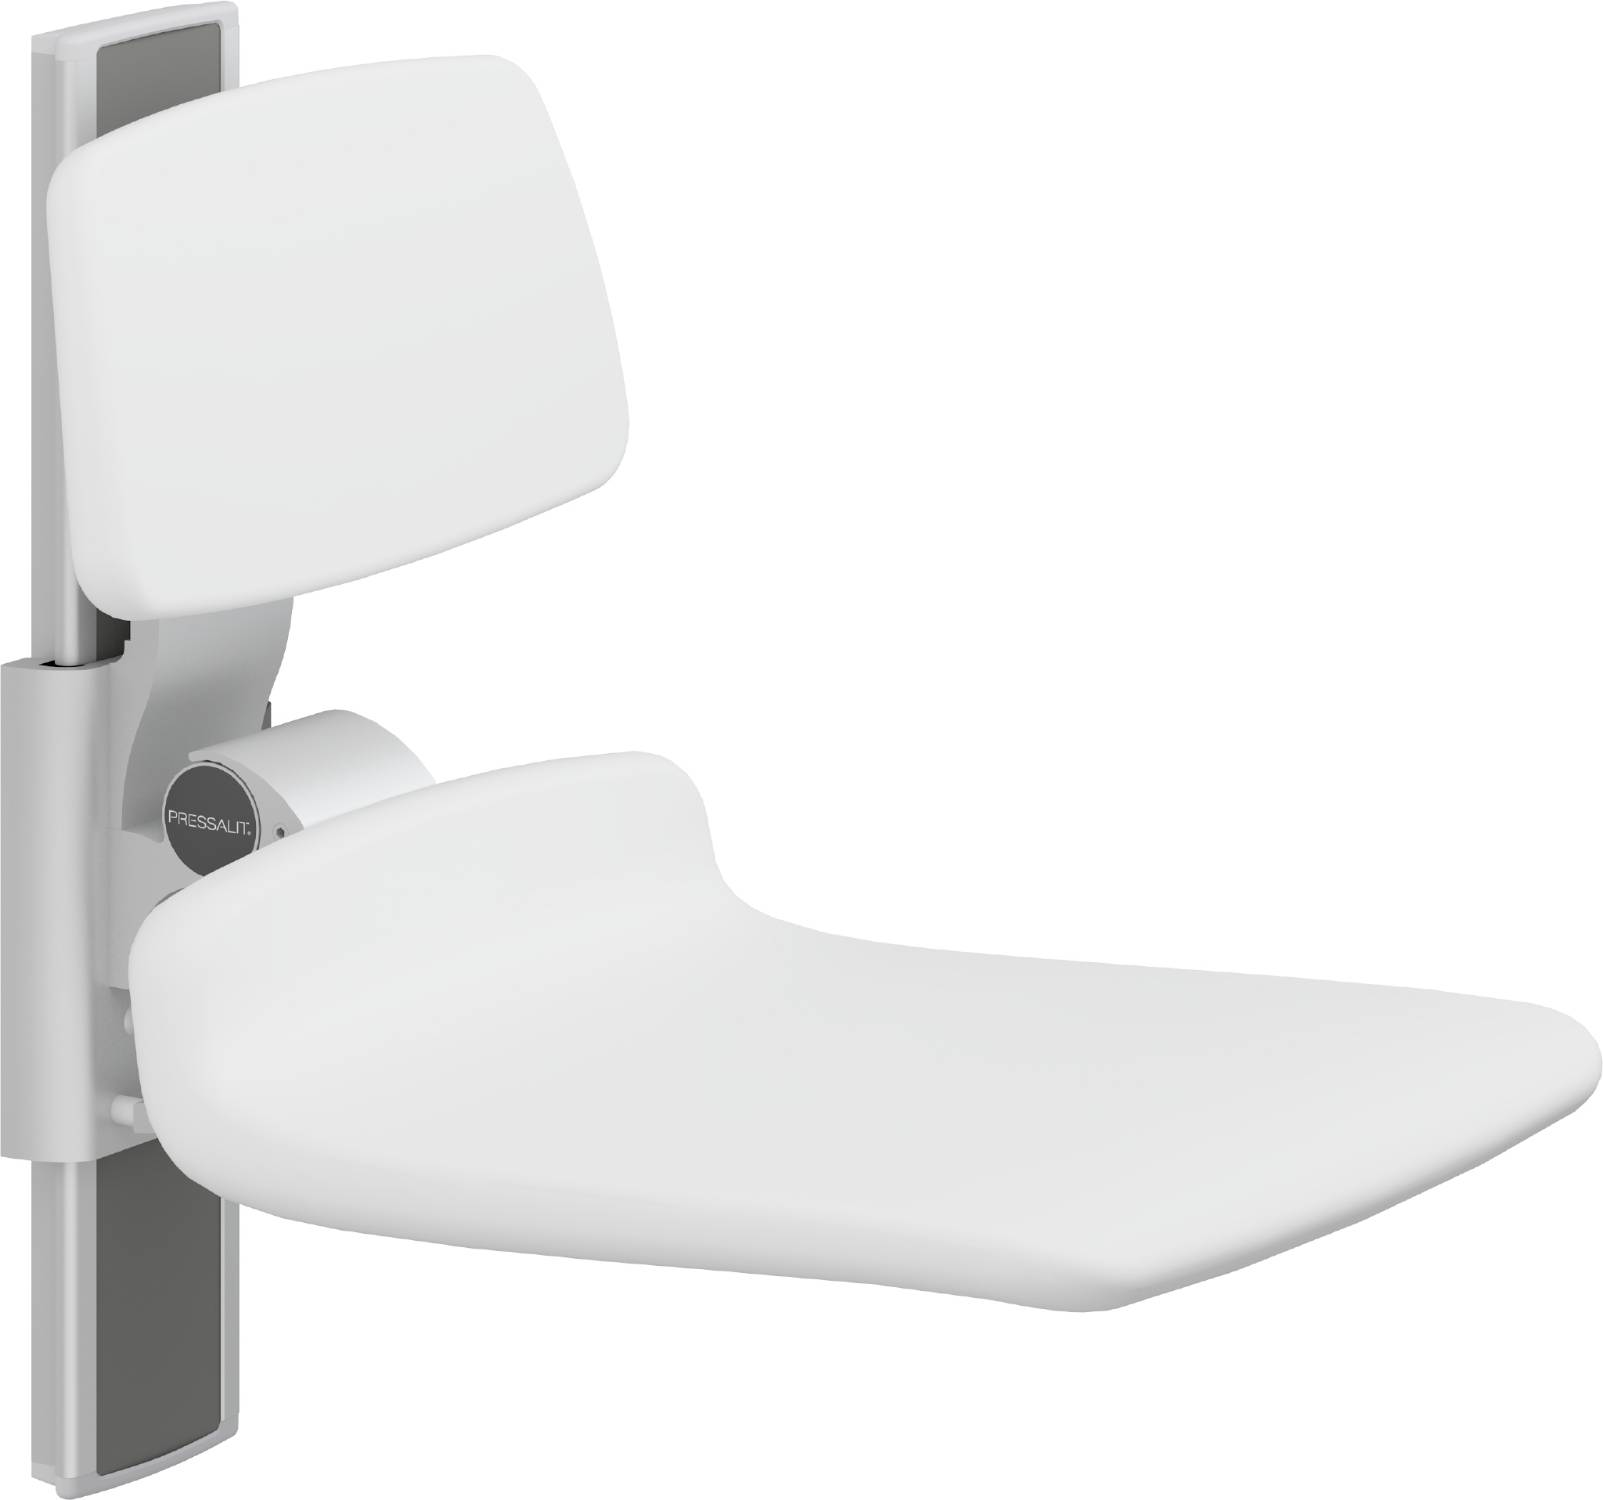 Shower seat PLUS 450 height adjustable - R7424